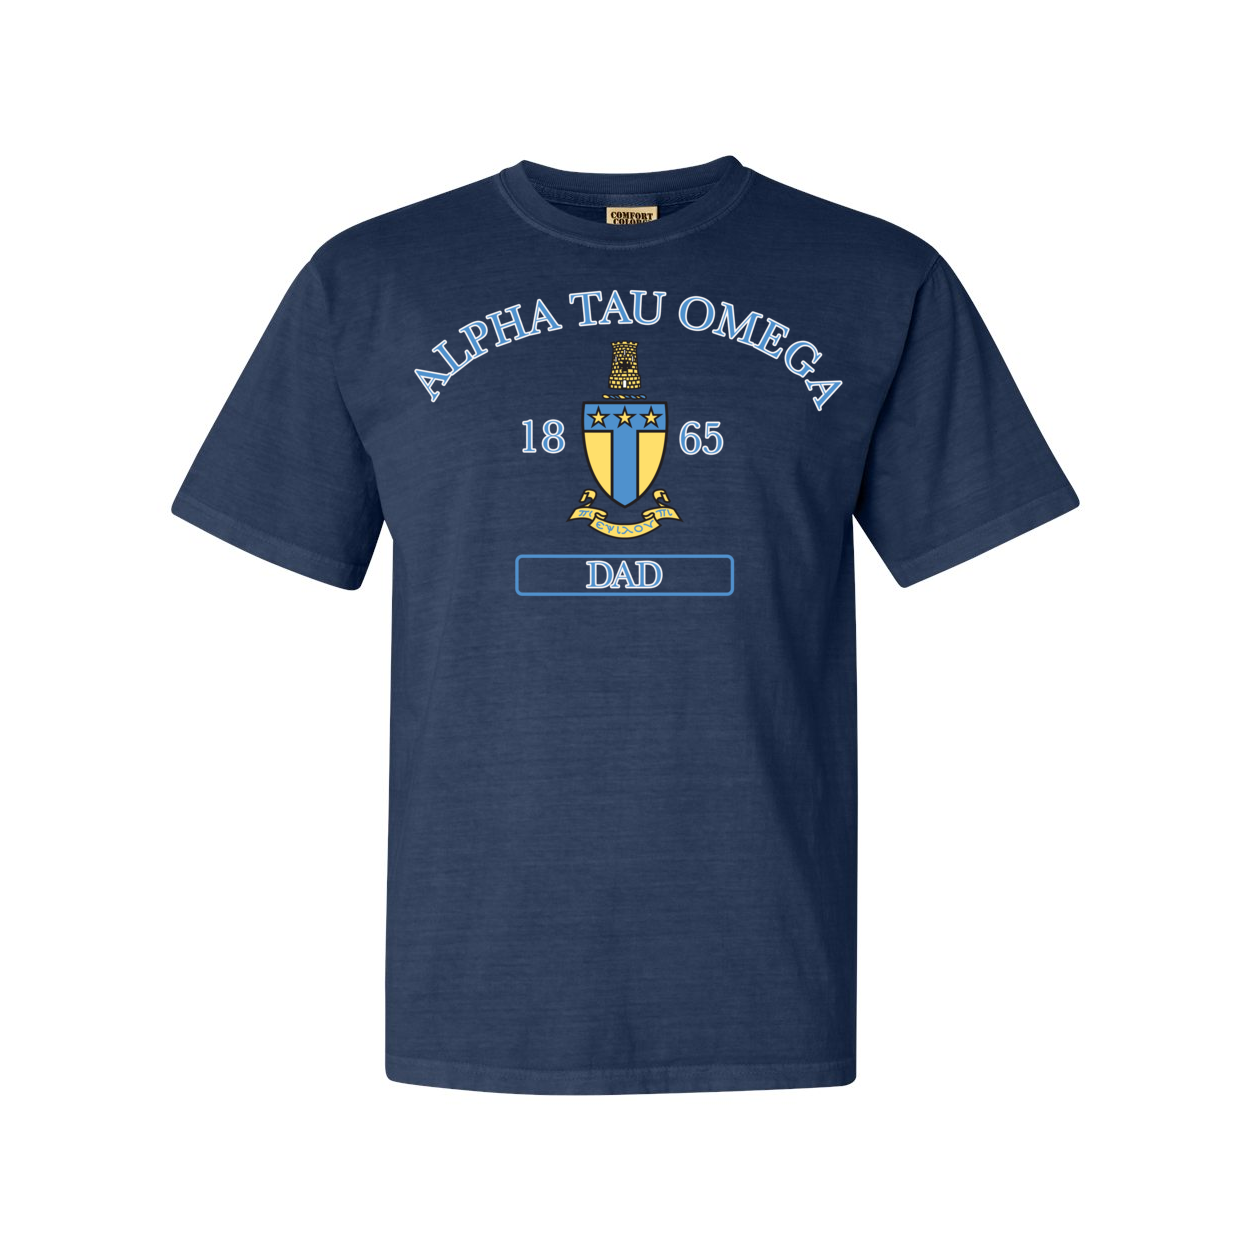 ATO DAD T-Shirt – ATO UTSA